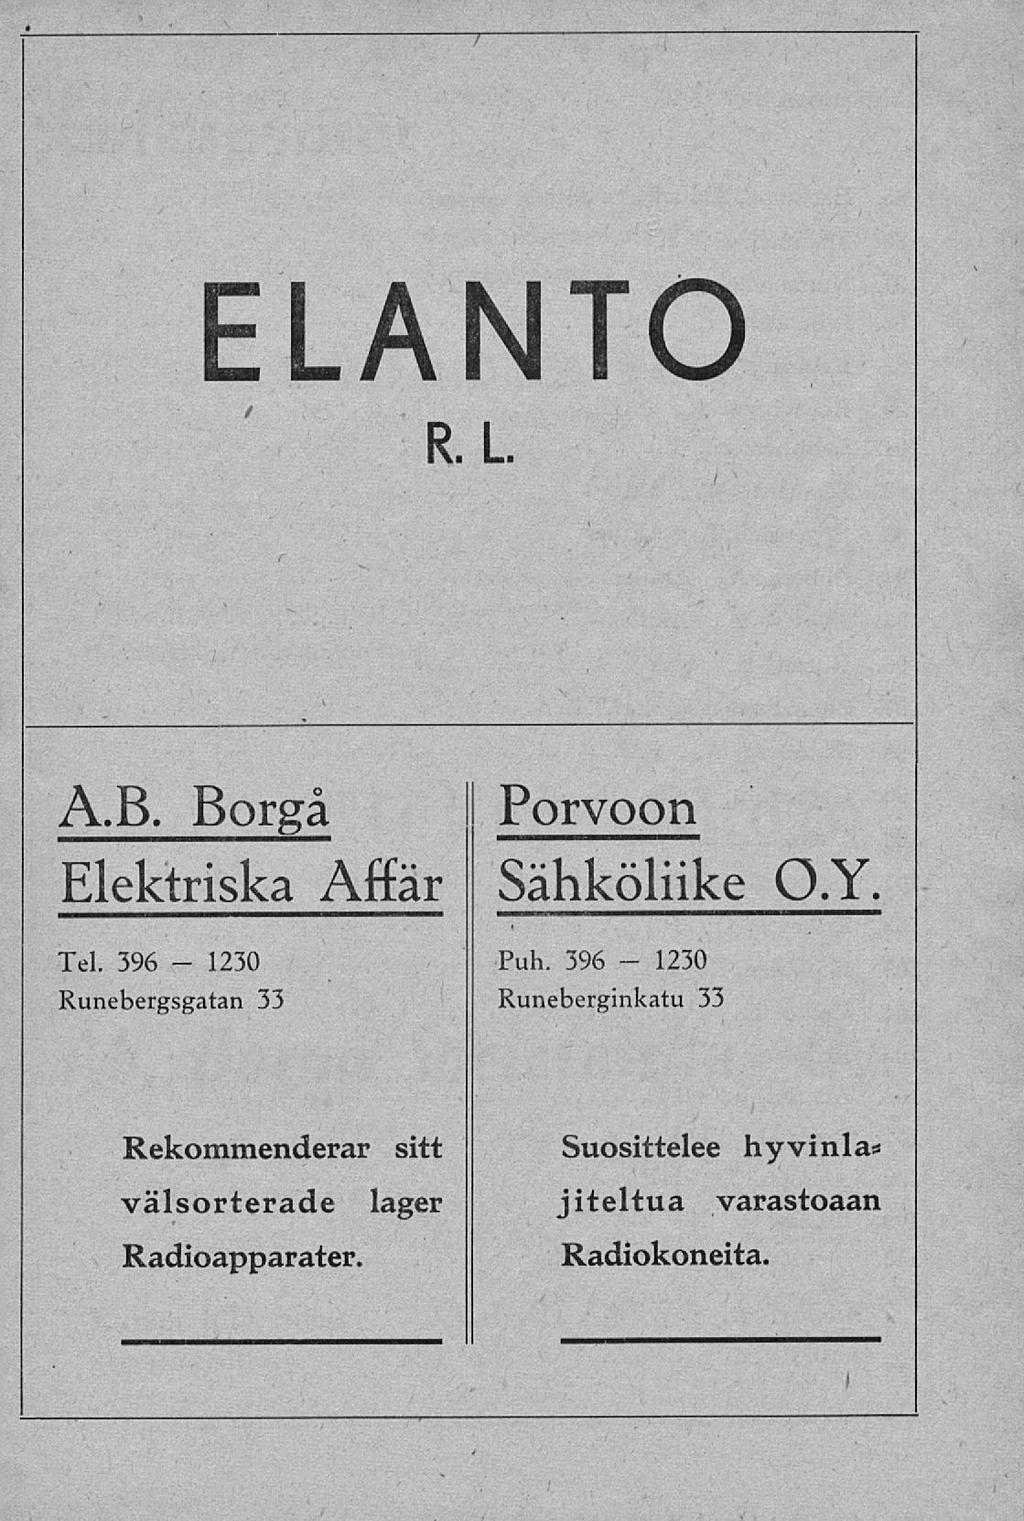 # ELANTO / R. L / A.B. Borgå Elektriska Affär - Tel. 396 1230 Runebergsgatan 33 Porvoon Sähköliike O.Y - Puh.